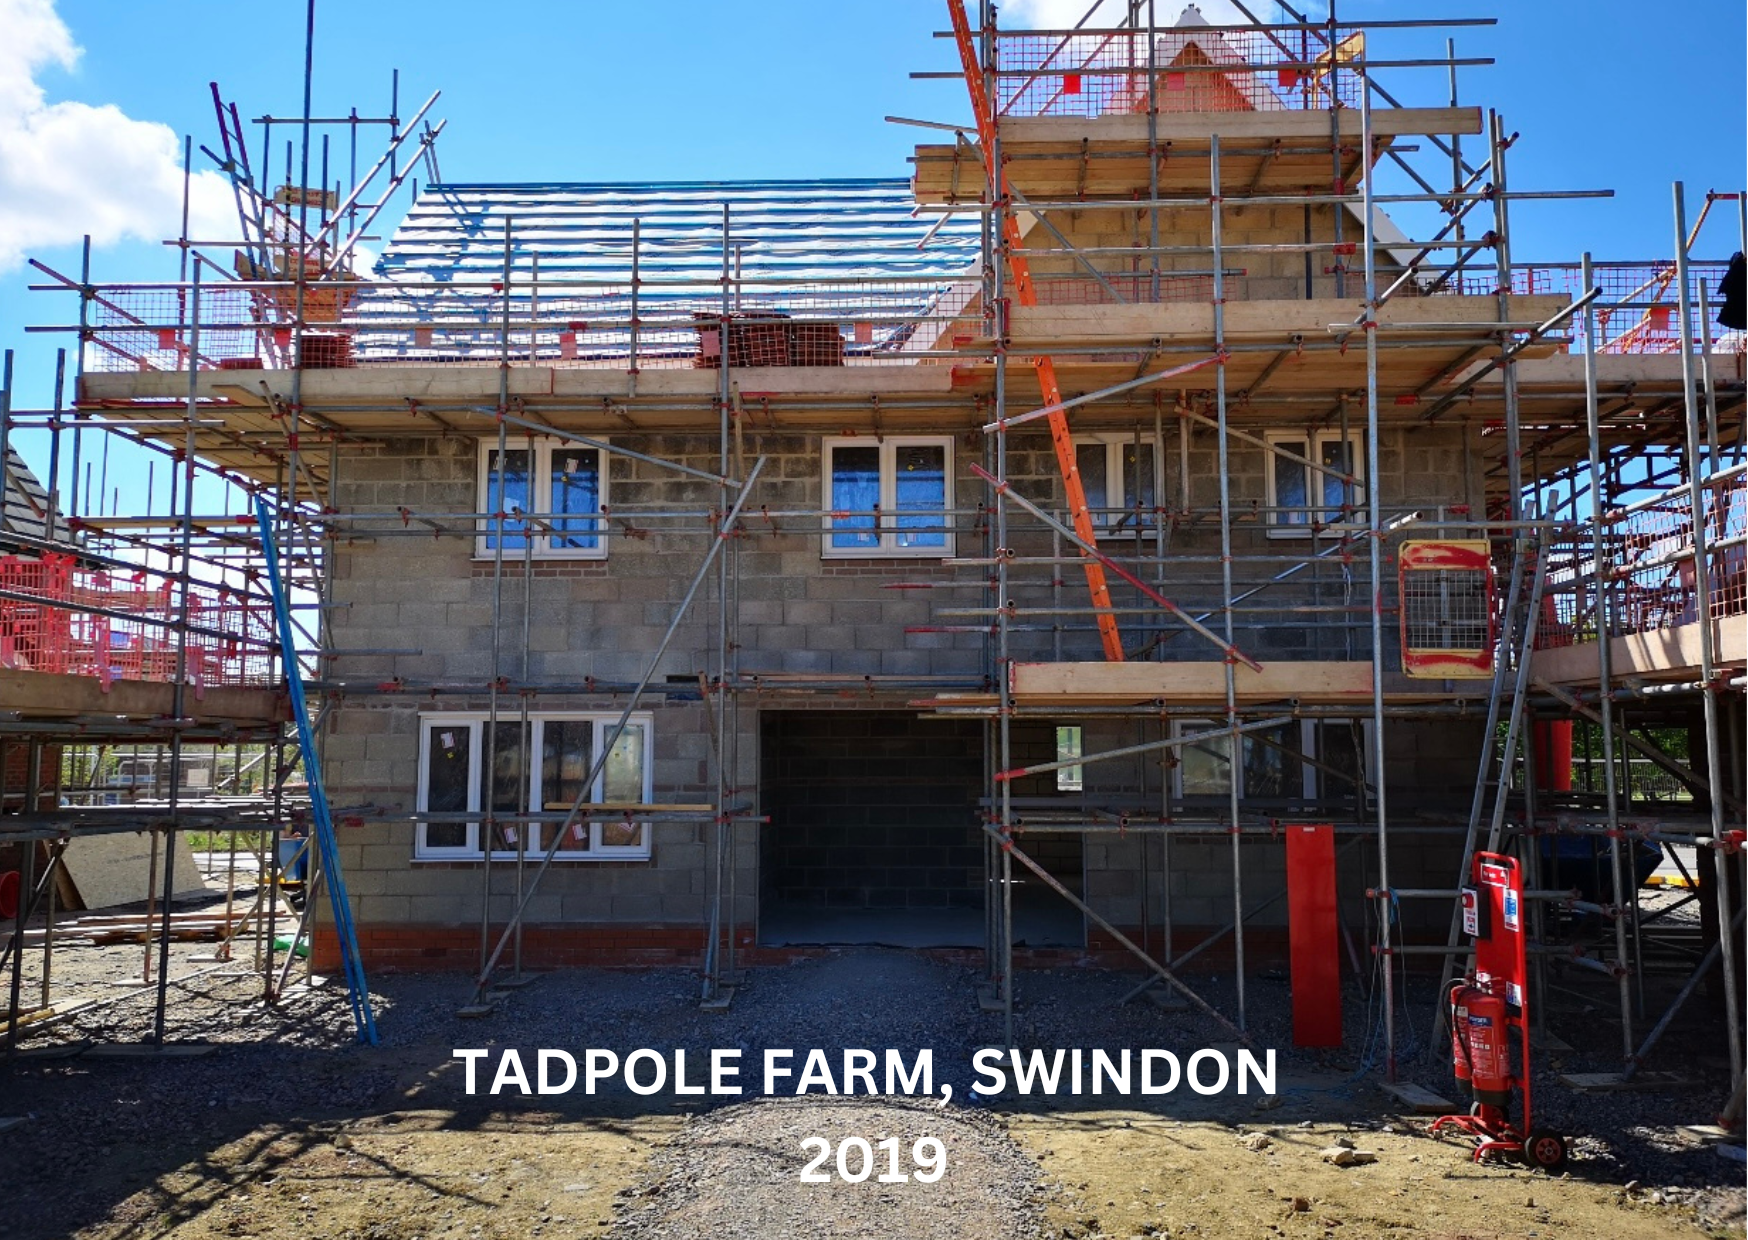 Tadpole Farm, Swindon - 146 Units